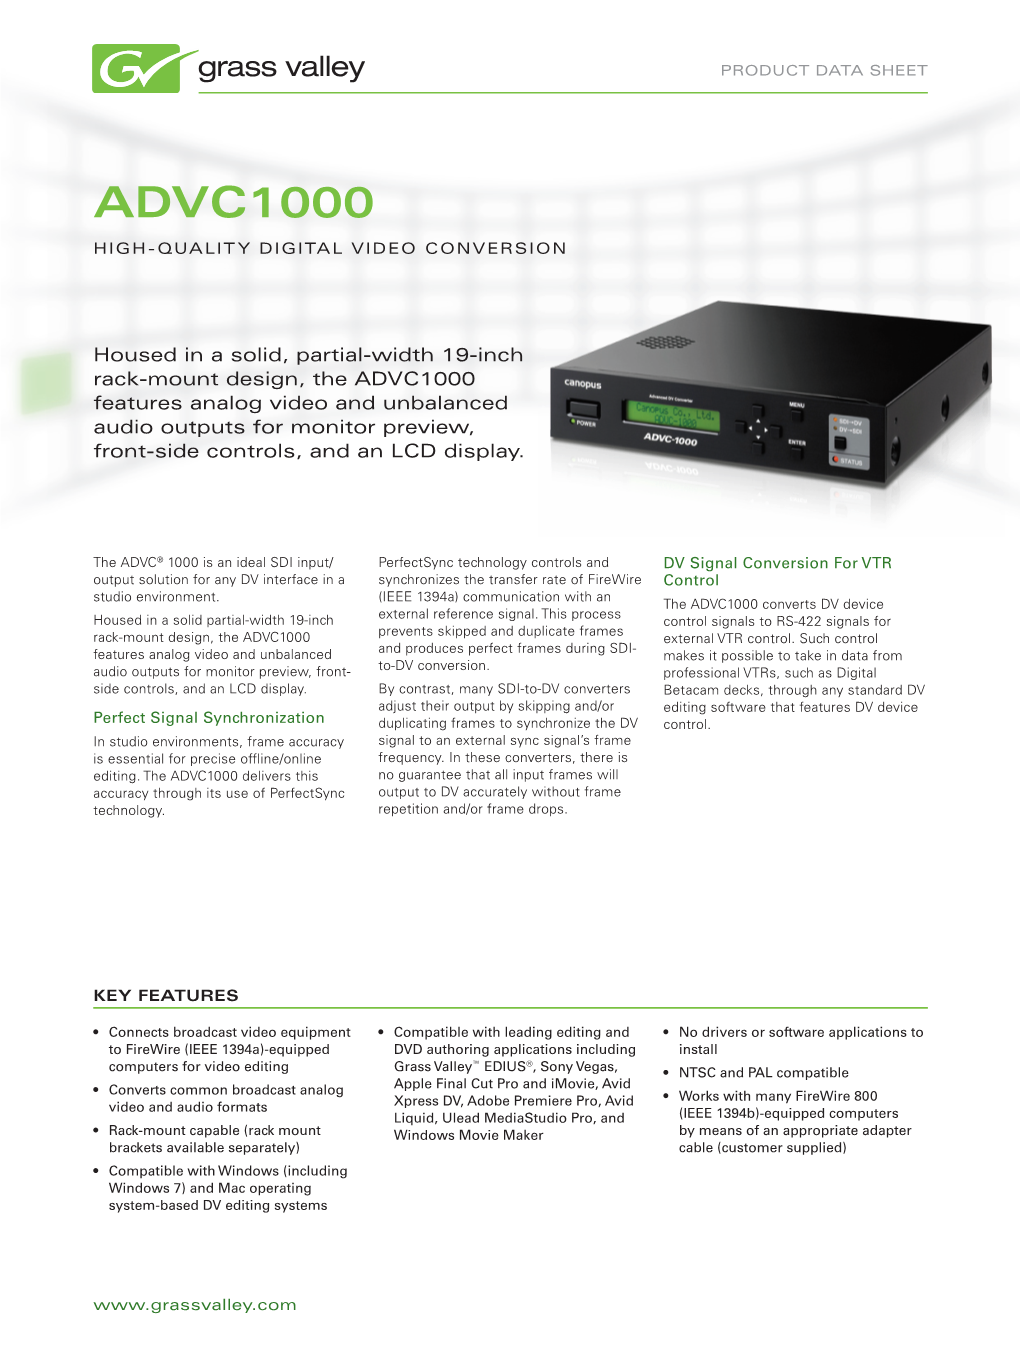 ADVC1000 High-Quality Digital Video Conversion